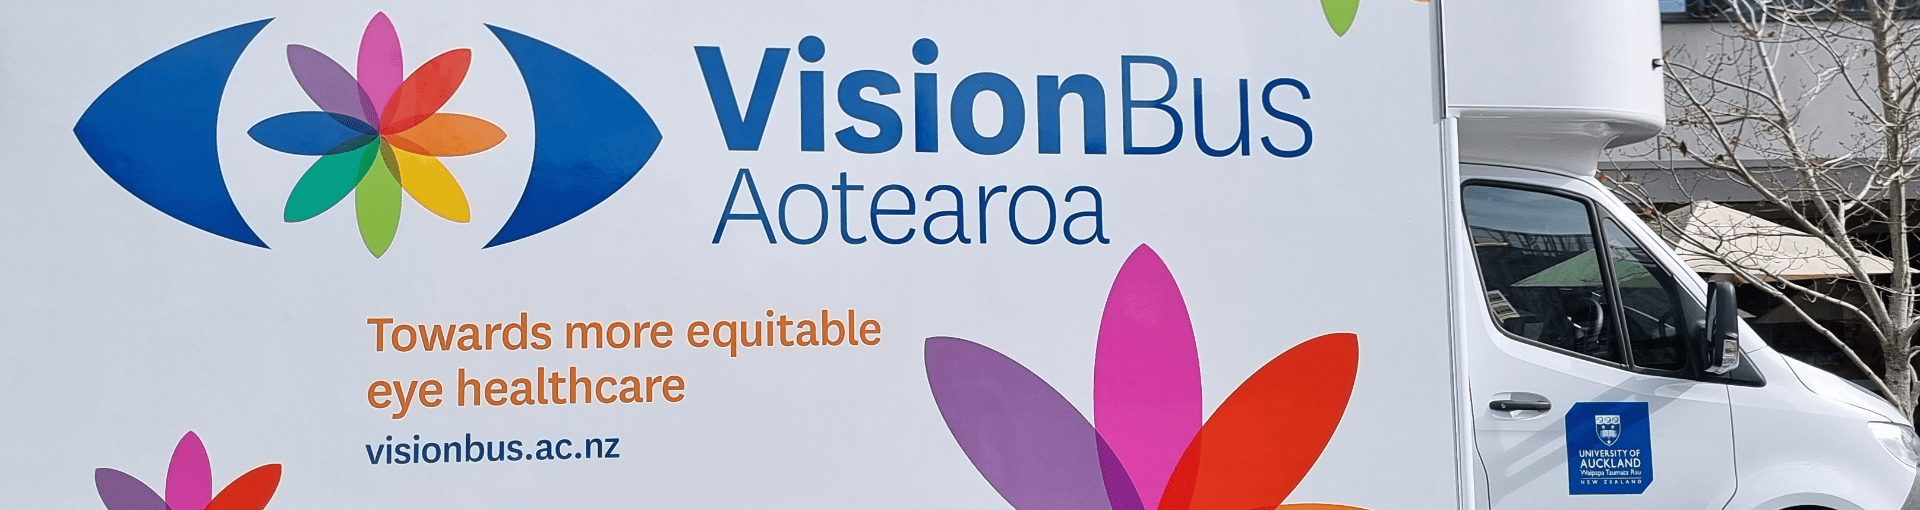 Vision bus Aotearoa